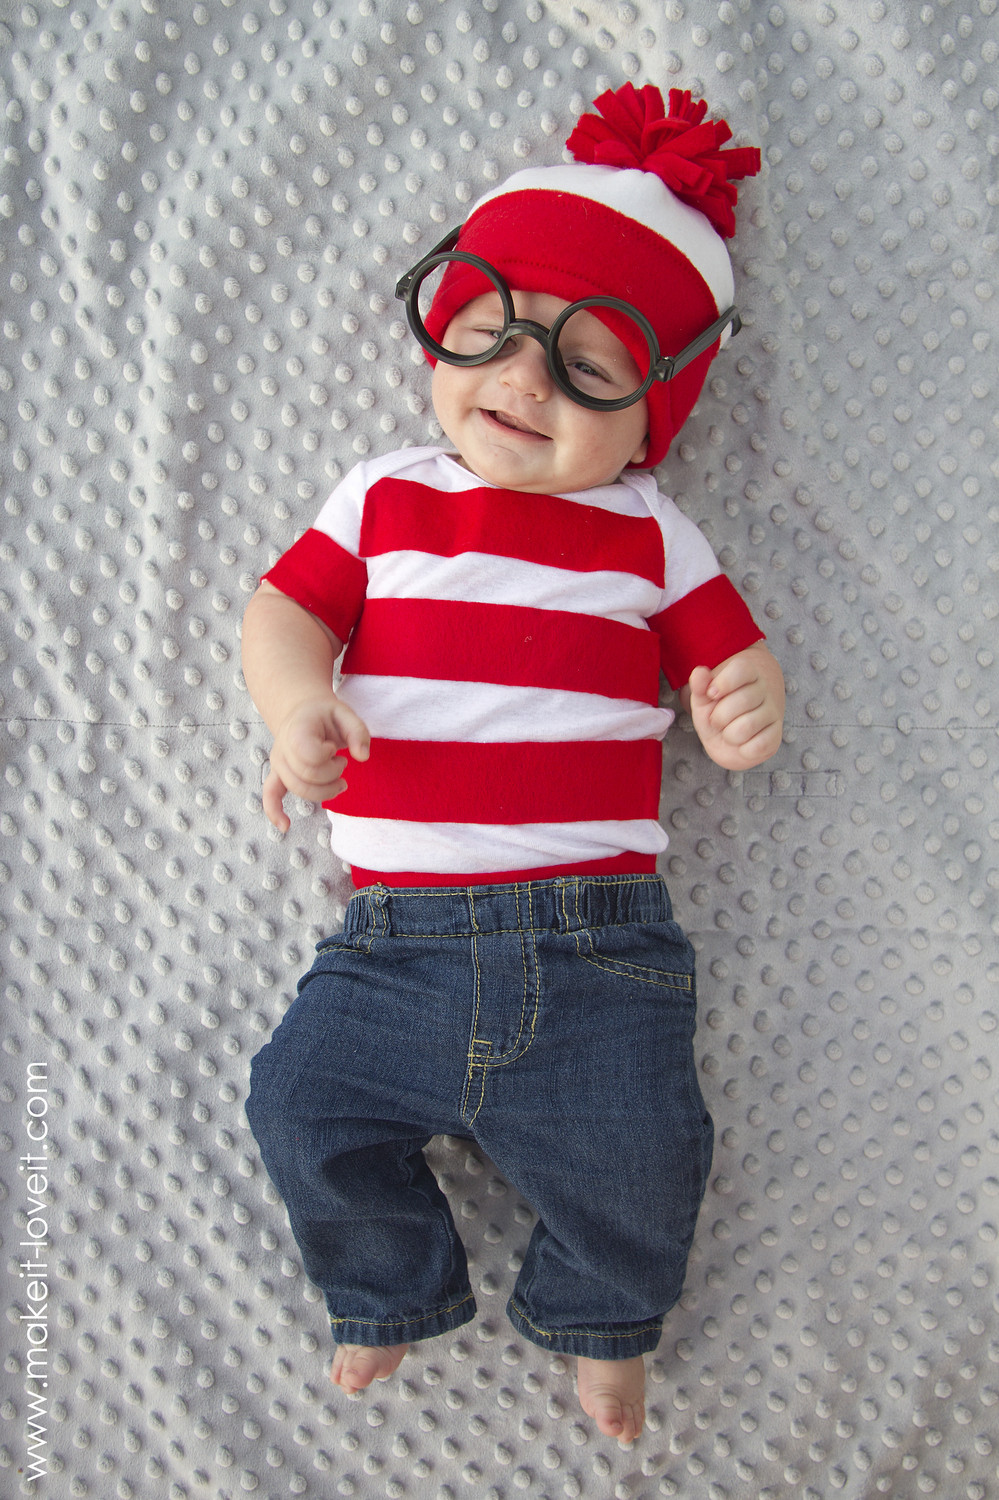 DIY Waldo Costume
 "Where s Waldo" Costume less than an hour